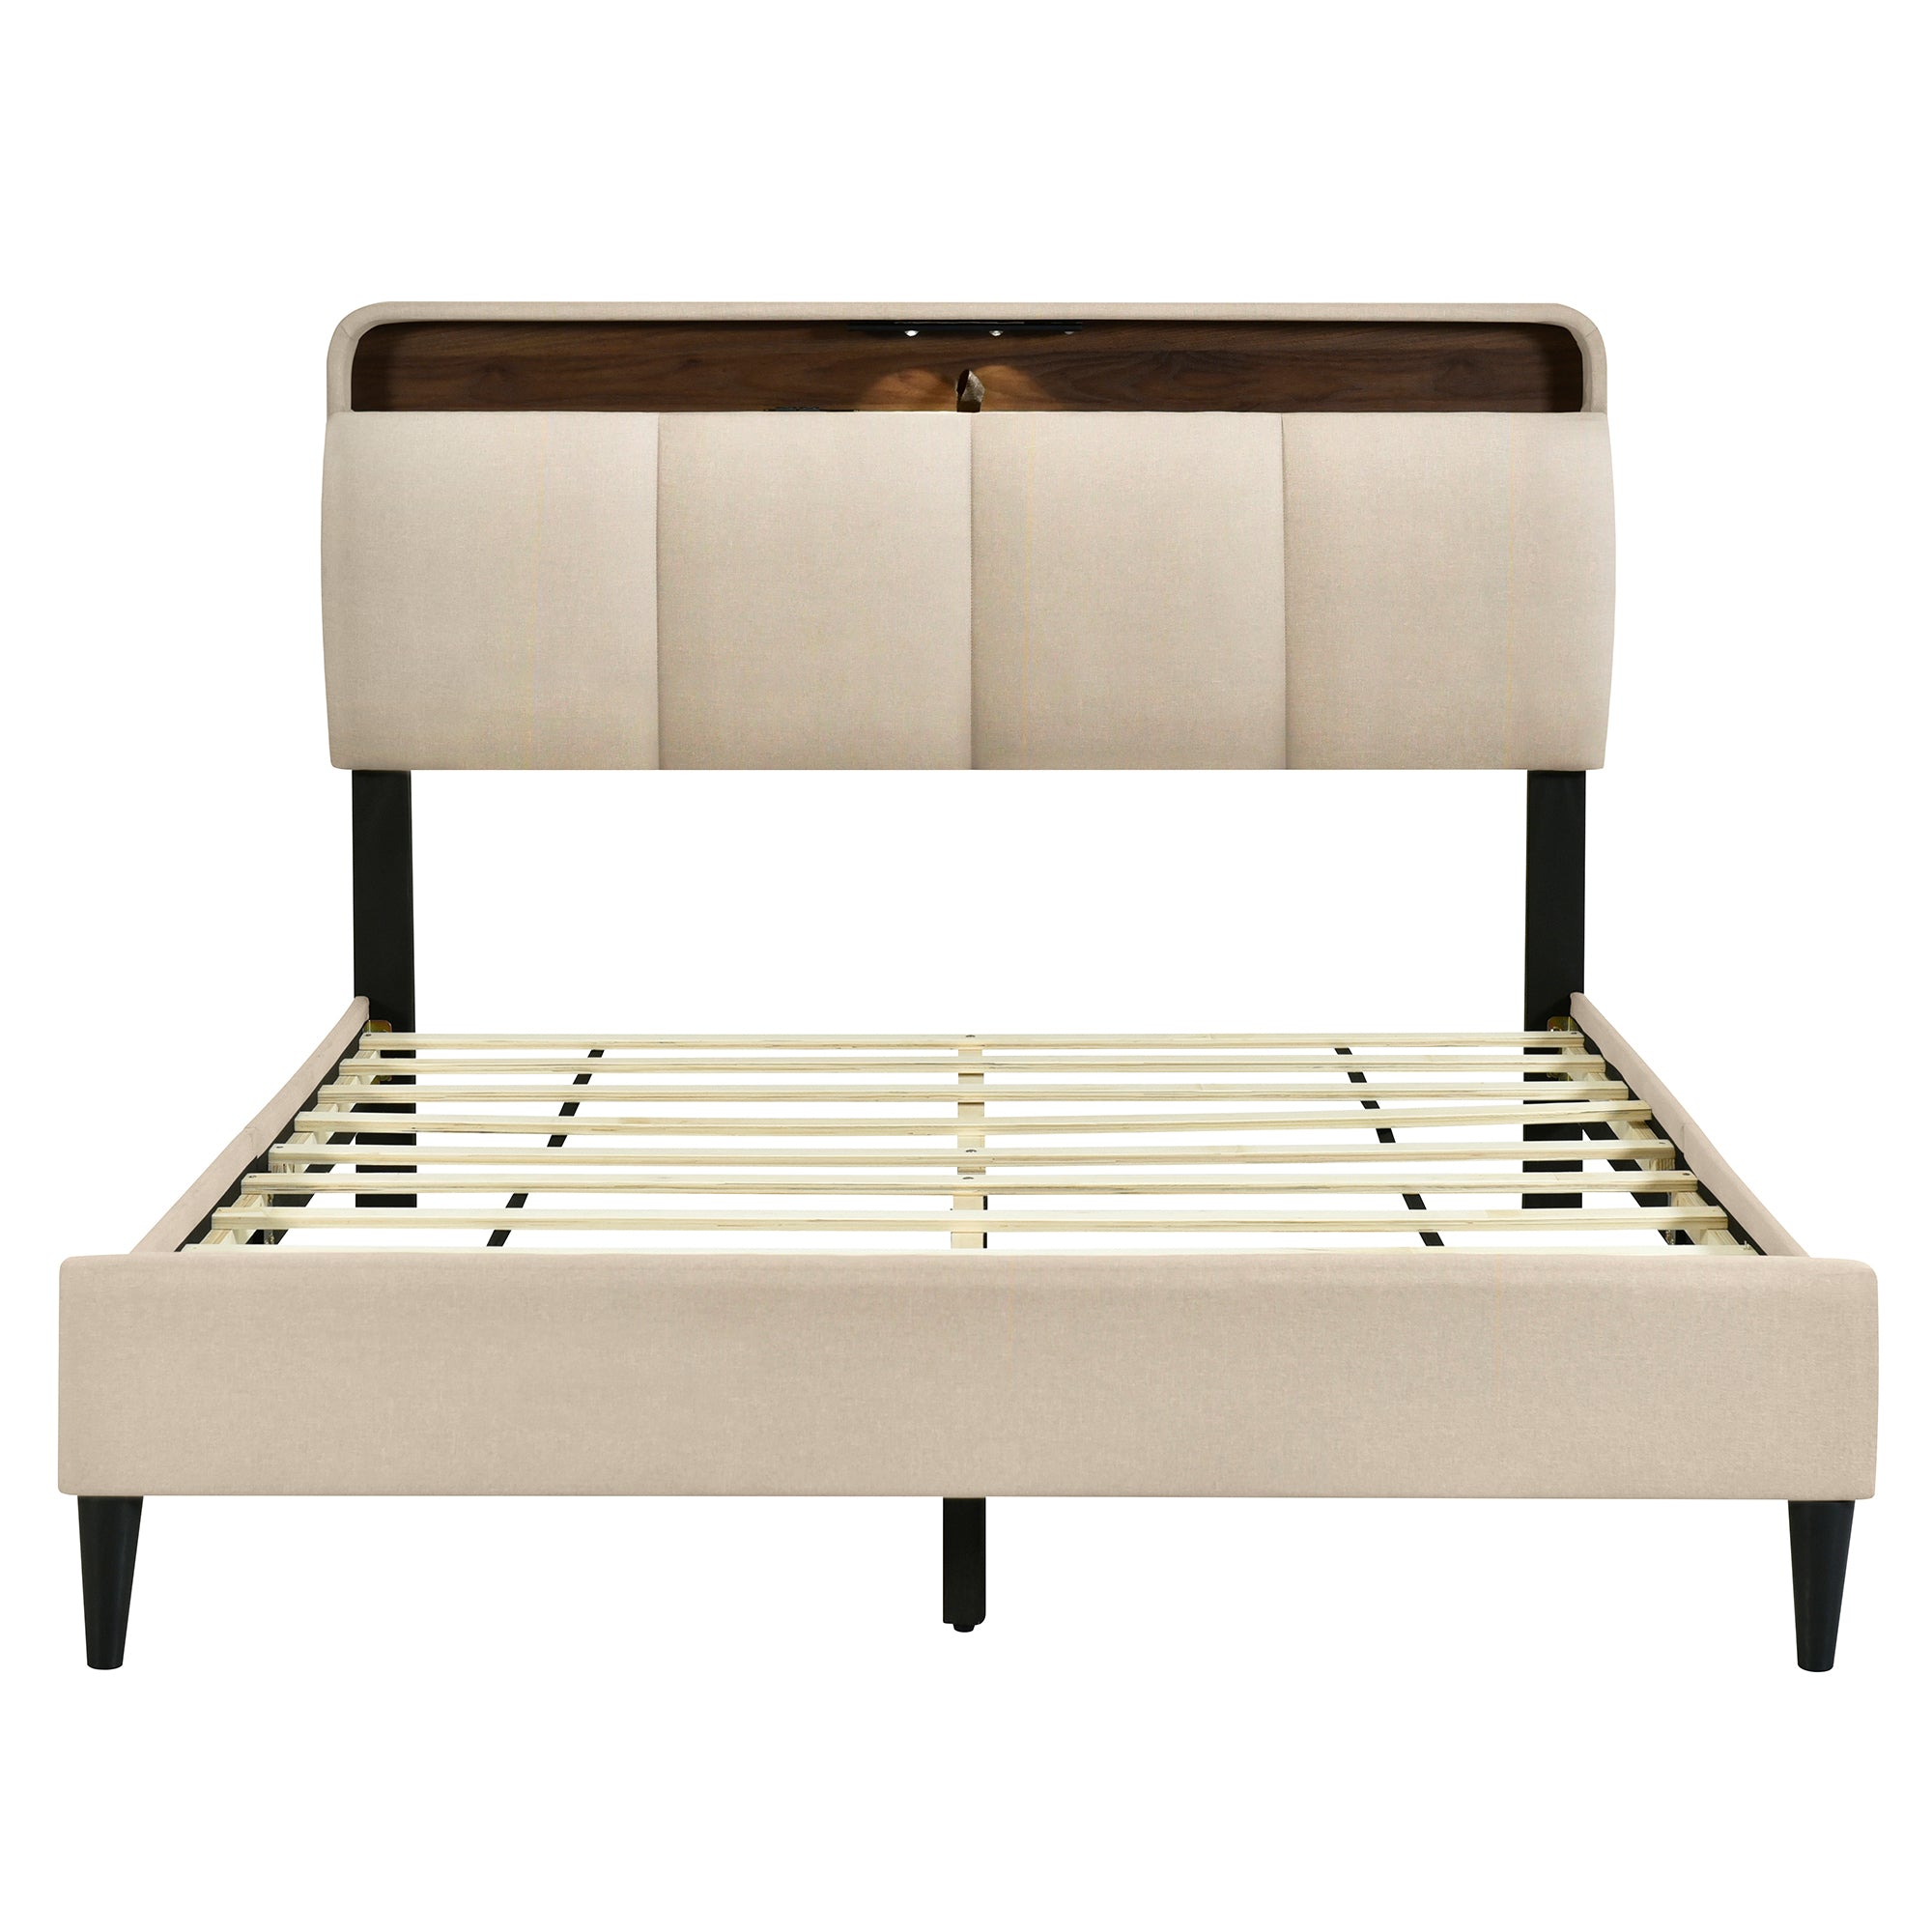 Queen size Upholstered Platform Bed with Storage beige-linen